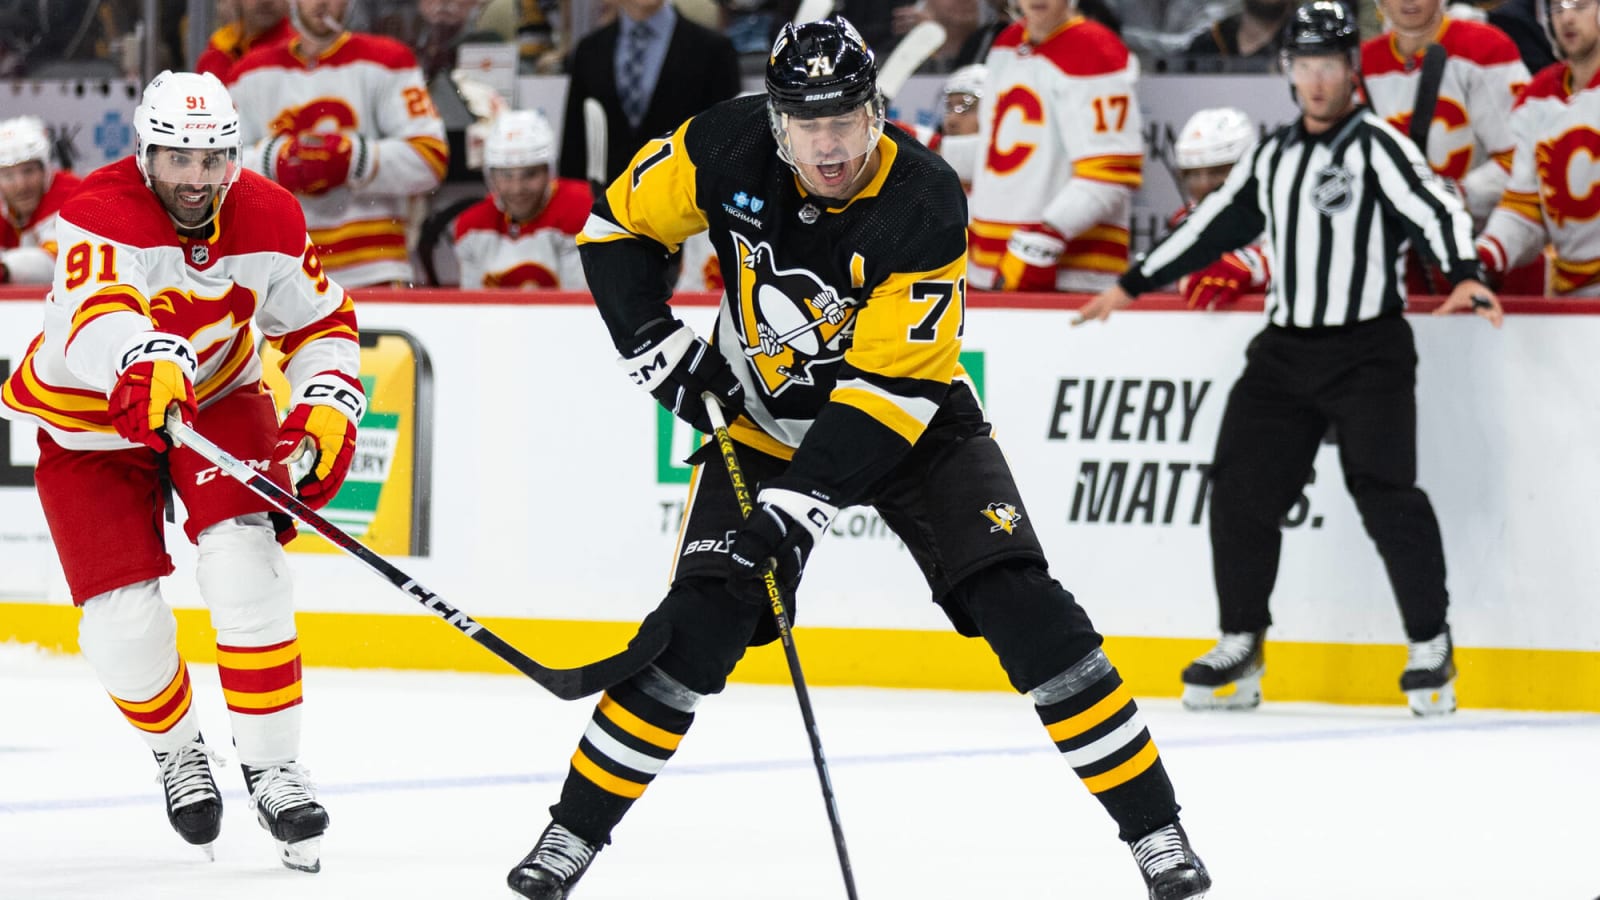 Penguins skate report: Sidney Crosby, Jeff Carter to play vs. Devils